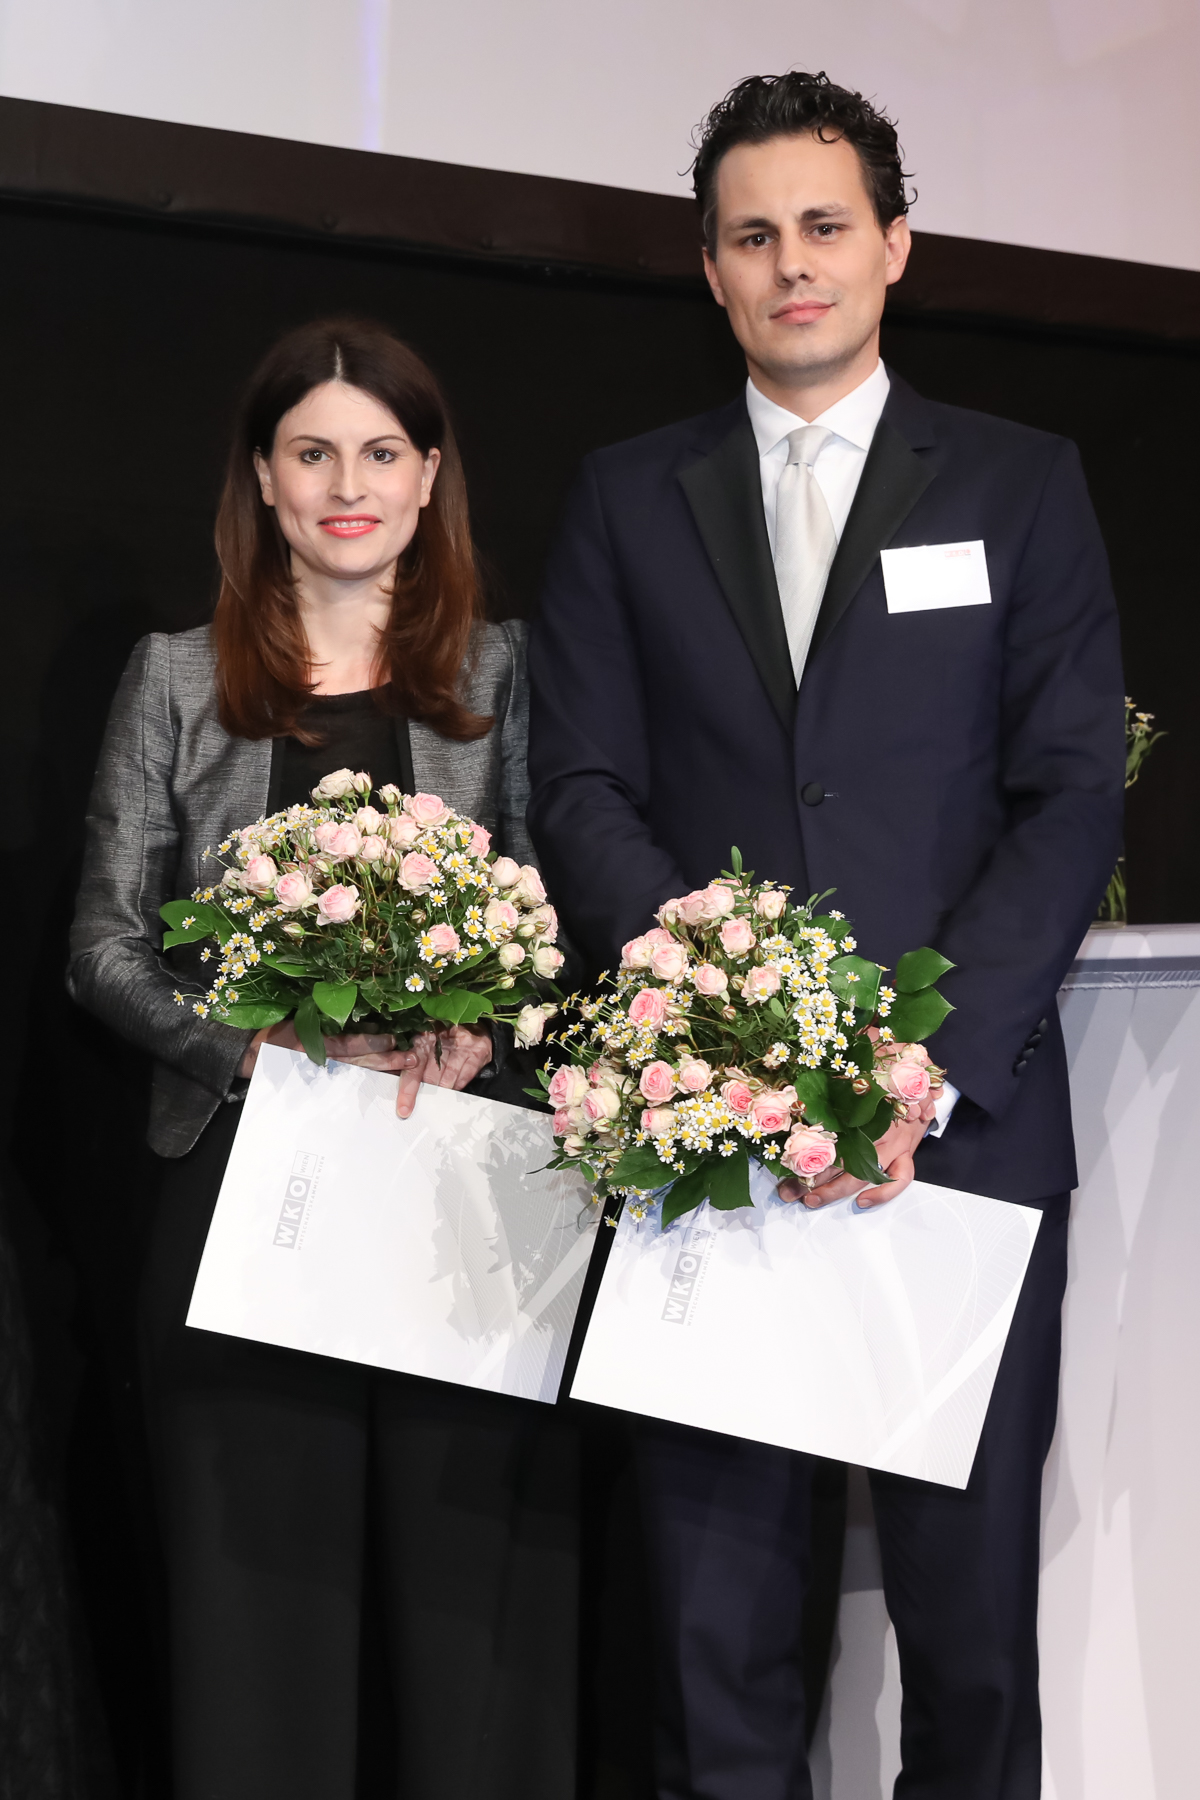 Hammurabi recognition prize for BVW graduate Sandra Annerer